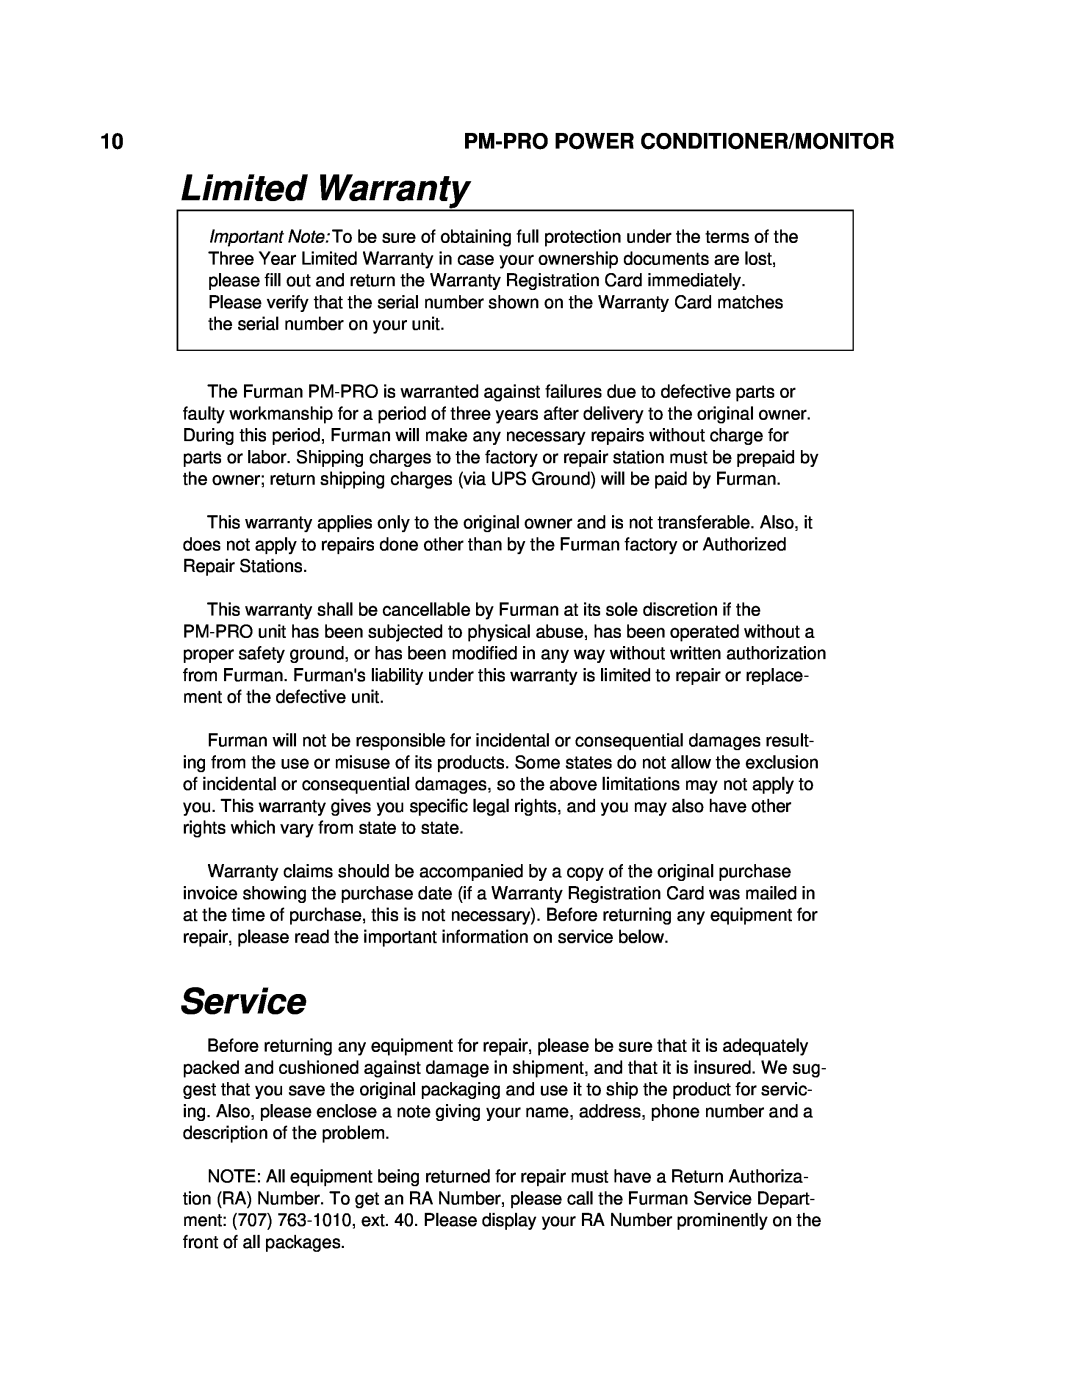 Furman Sound PM-PRO-E owner manual Limited Warranty, Service, Pm-Pro Power Conditioner/Monitor 